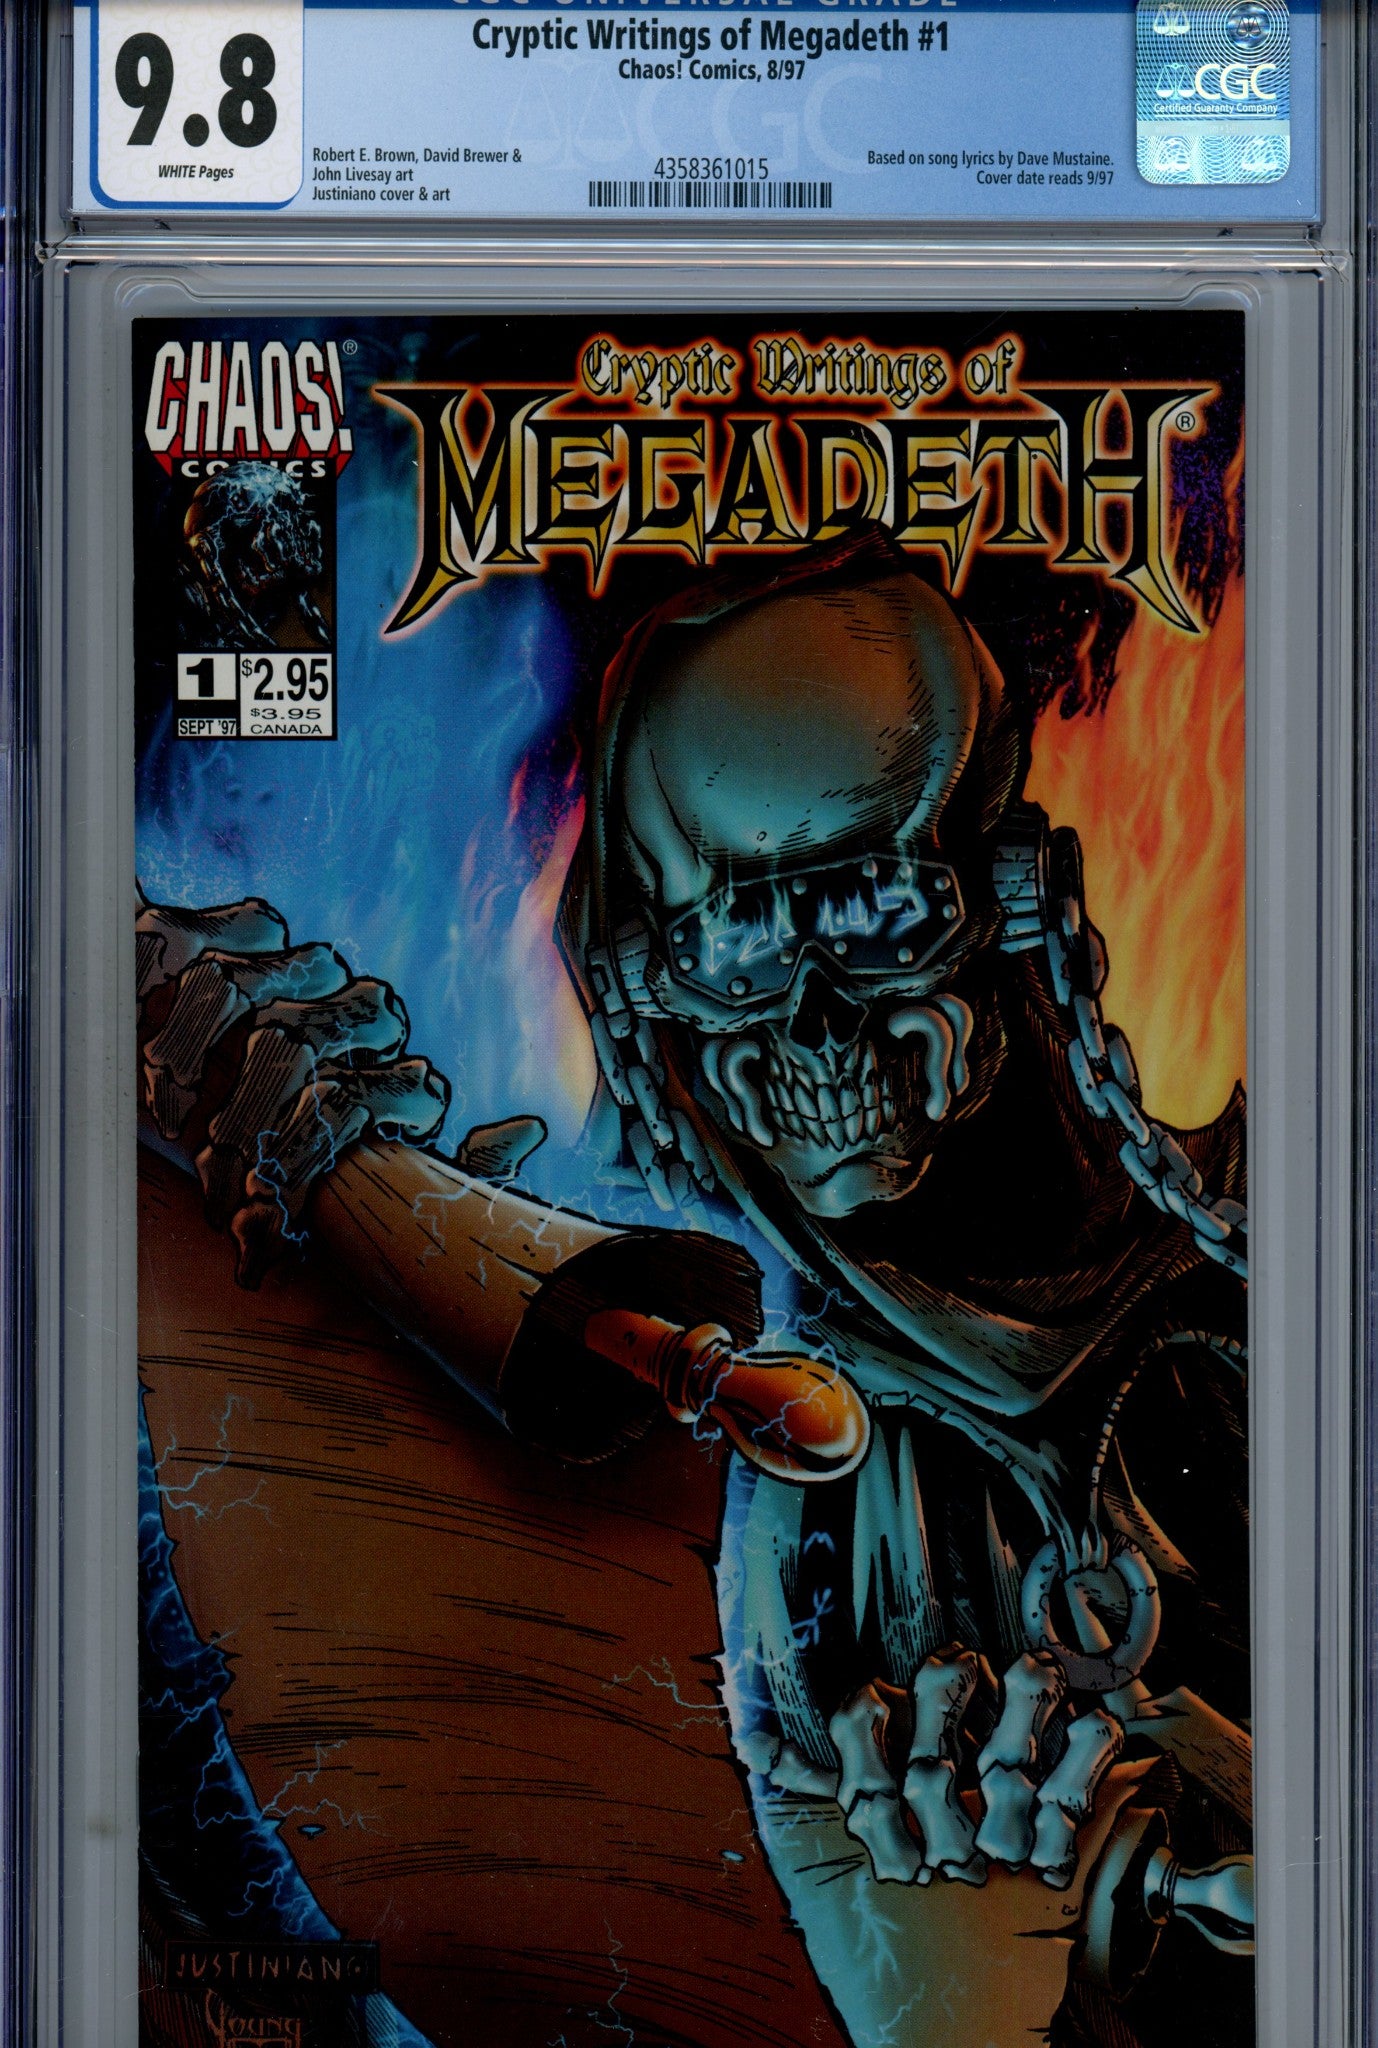 Cryptic Writings of Megadeth 1 CGC 9.8 (NM/M) (1997) 